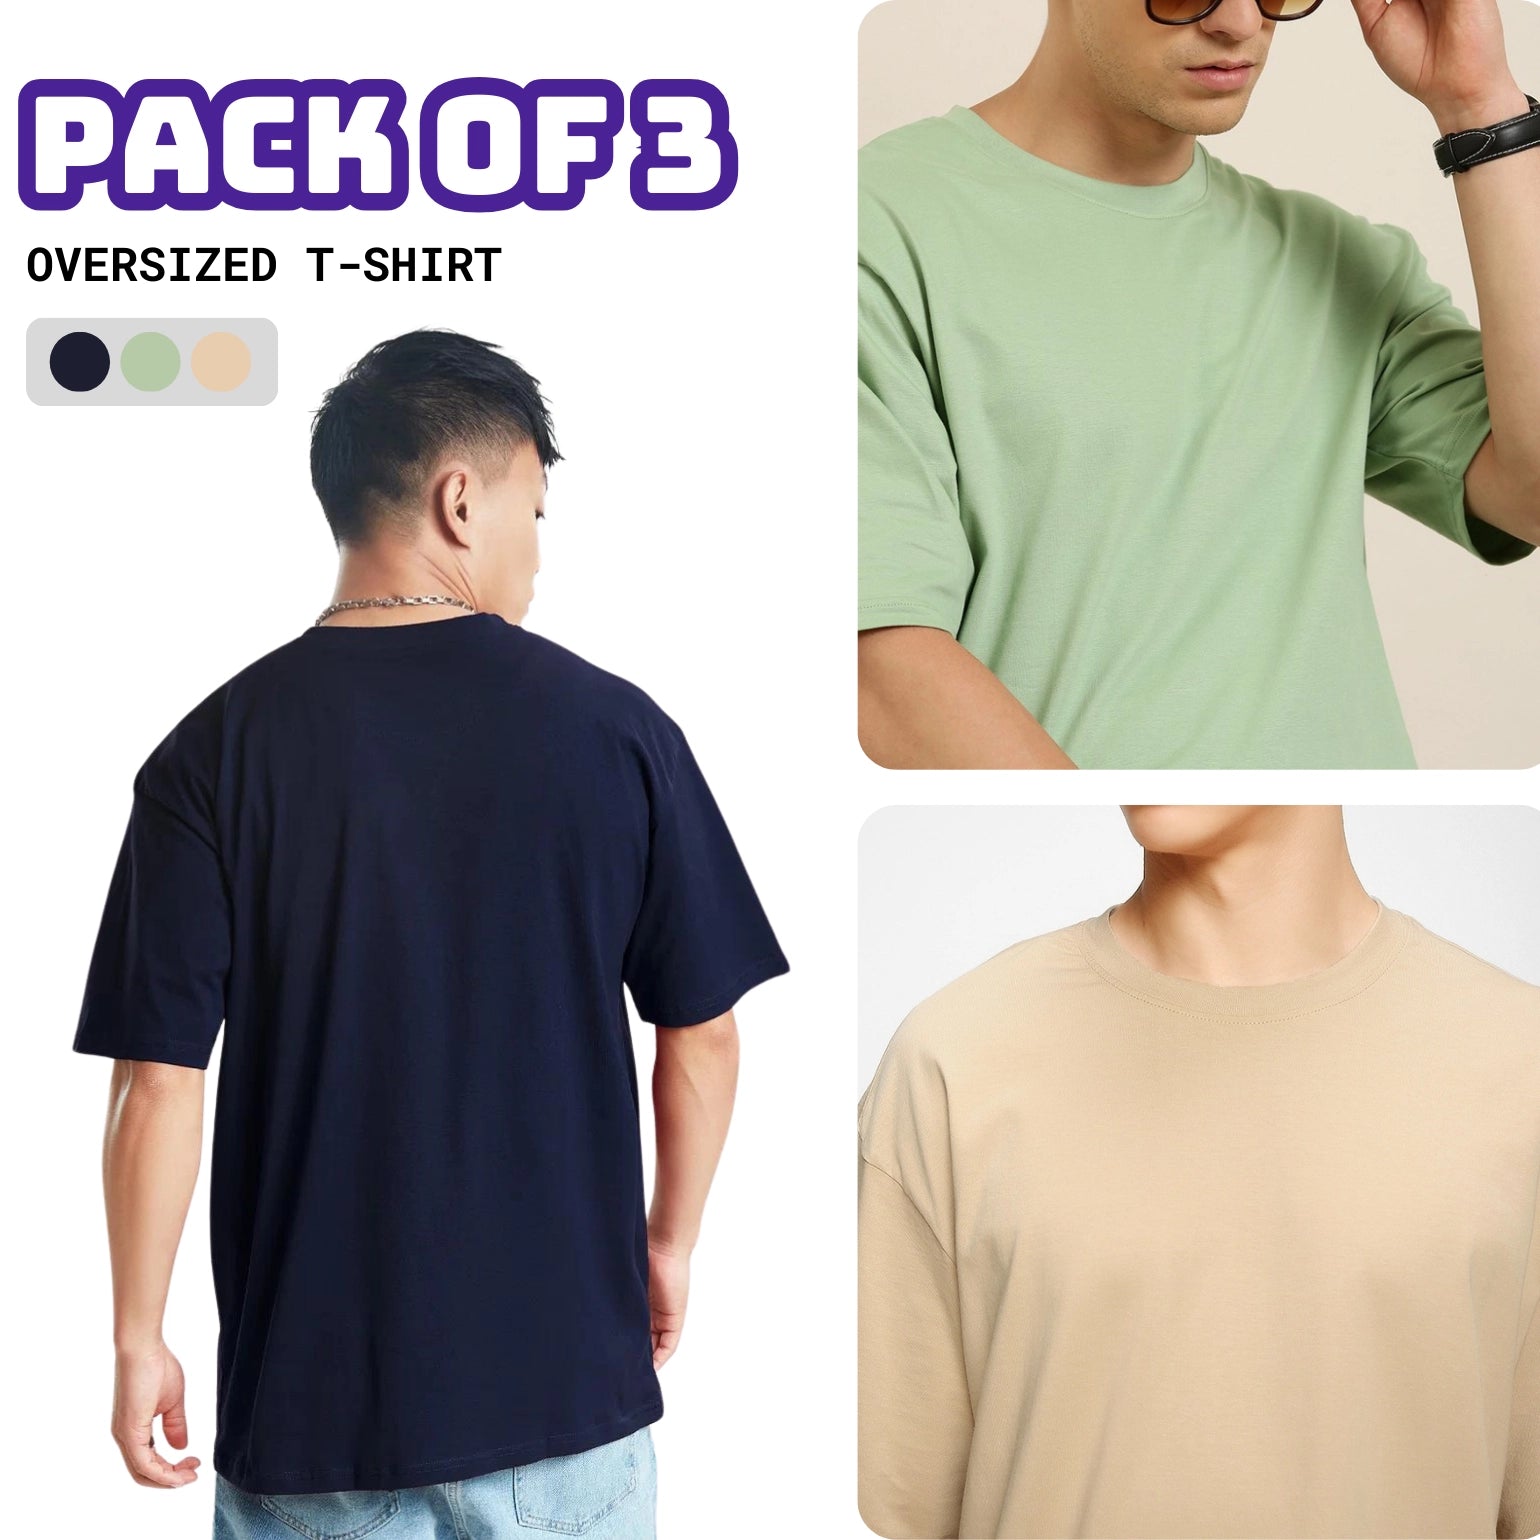 Pack of 3 Oversized T-shirt in Navy Blue, Sage Green, Beige - SleekandPeek